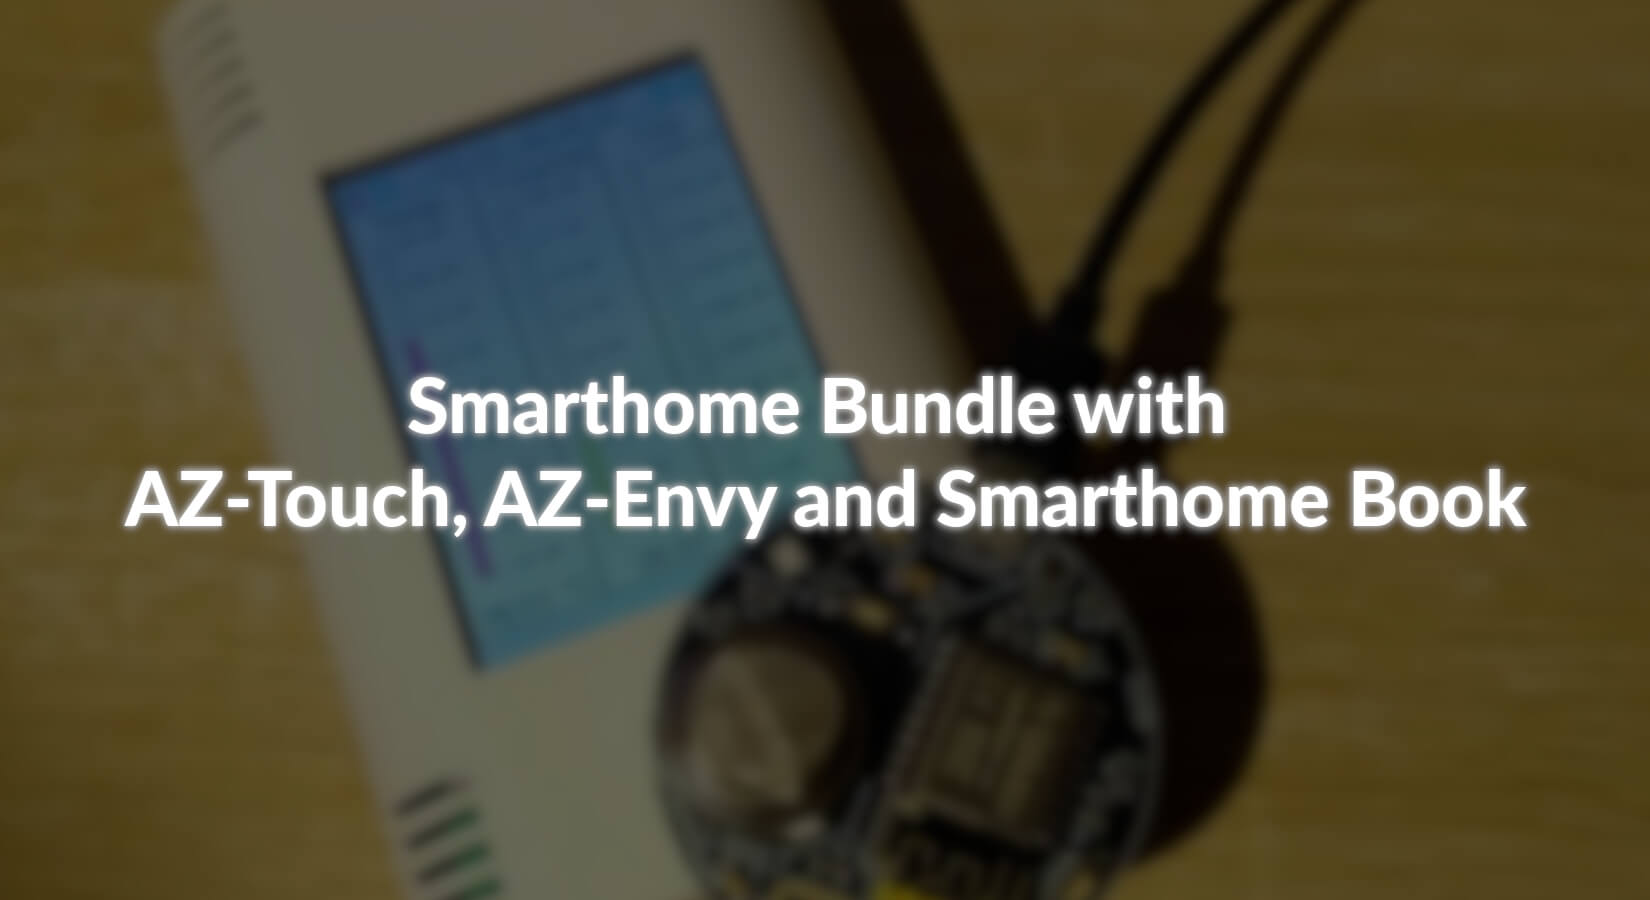 Smarthome Bundle with AZ-Touch, AZ-Envy and Smarthome Book - AZ-Delivery